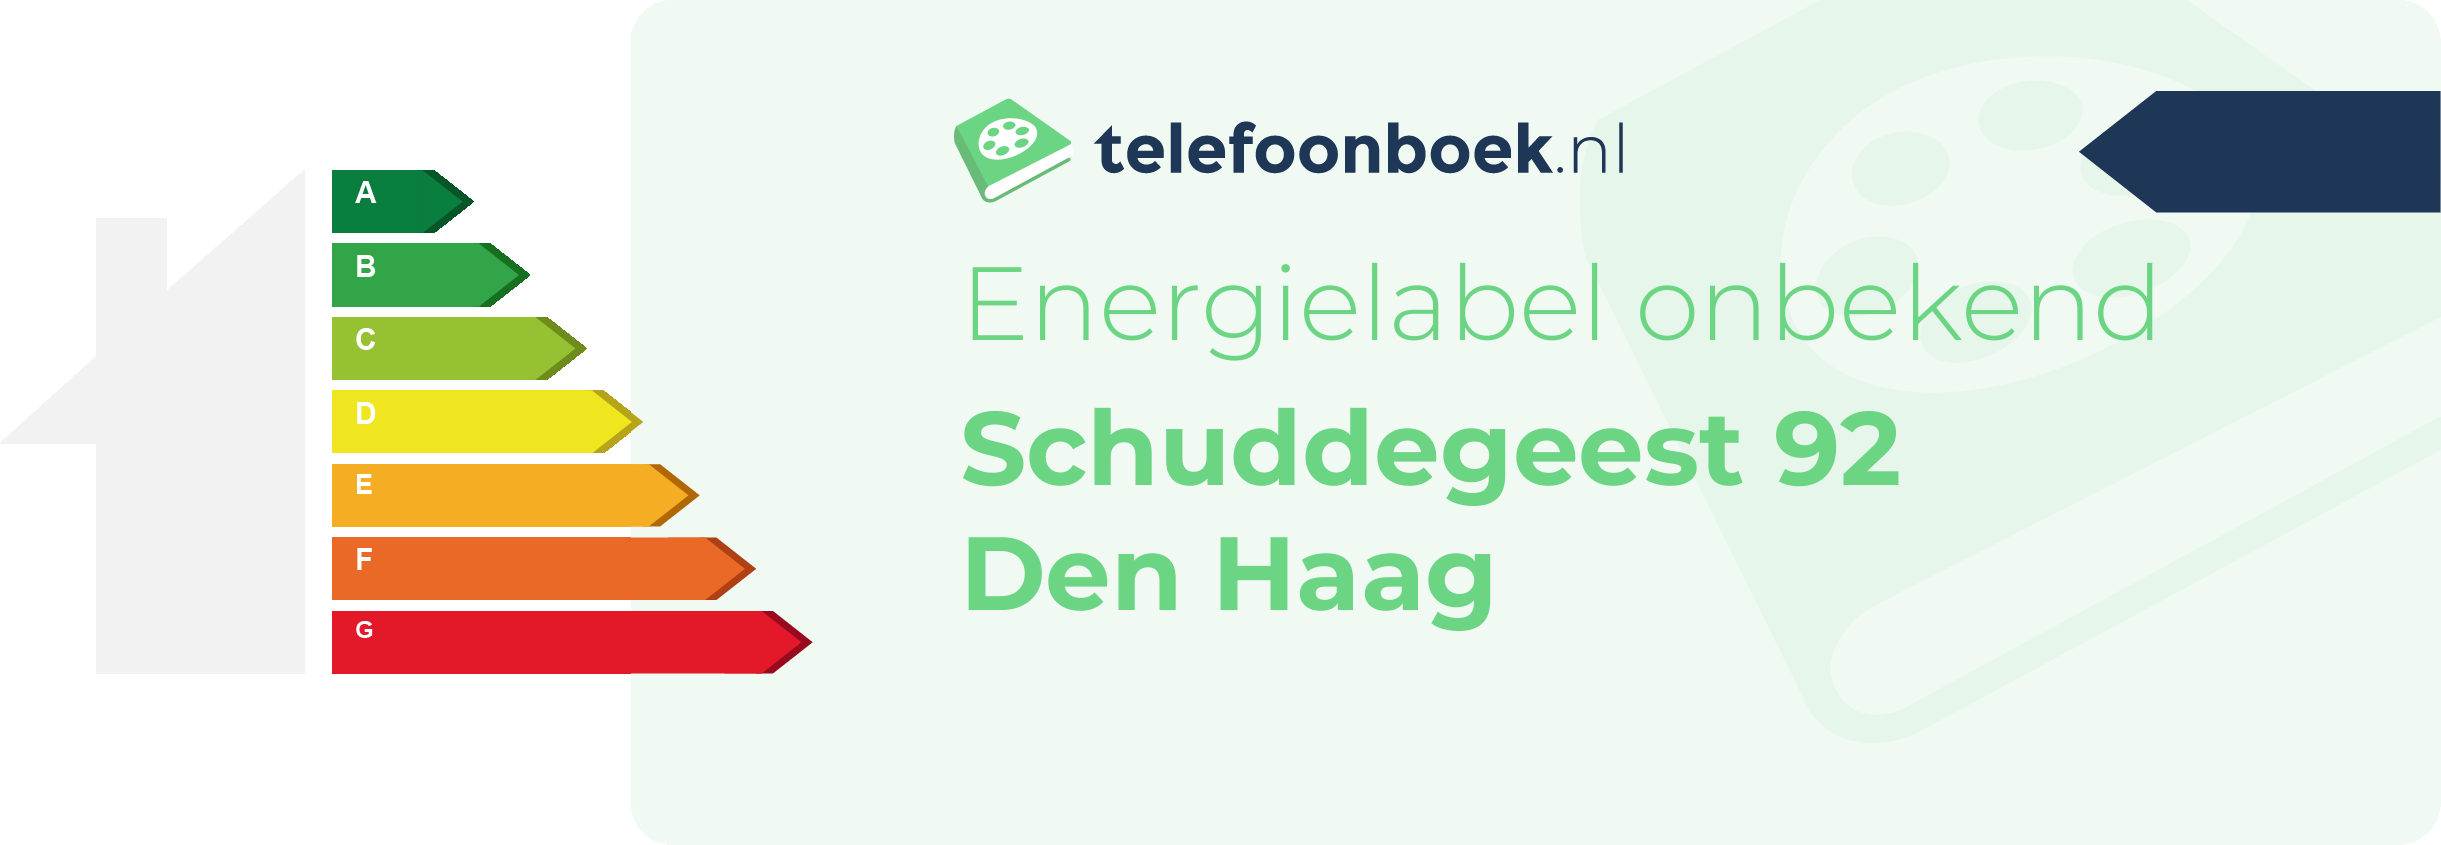 Energielabel Schuddegeest 92 Den Haag